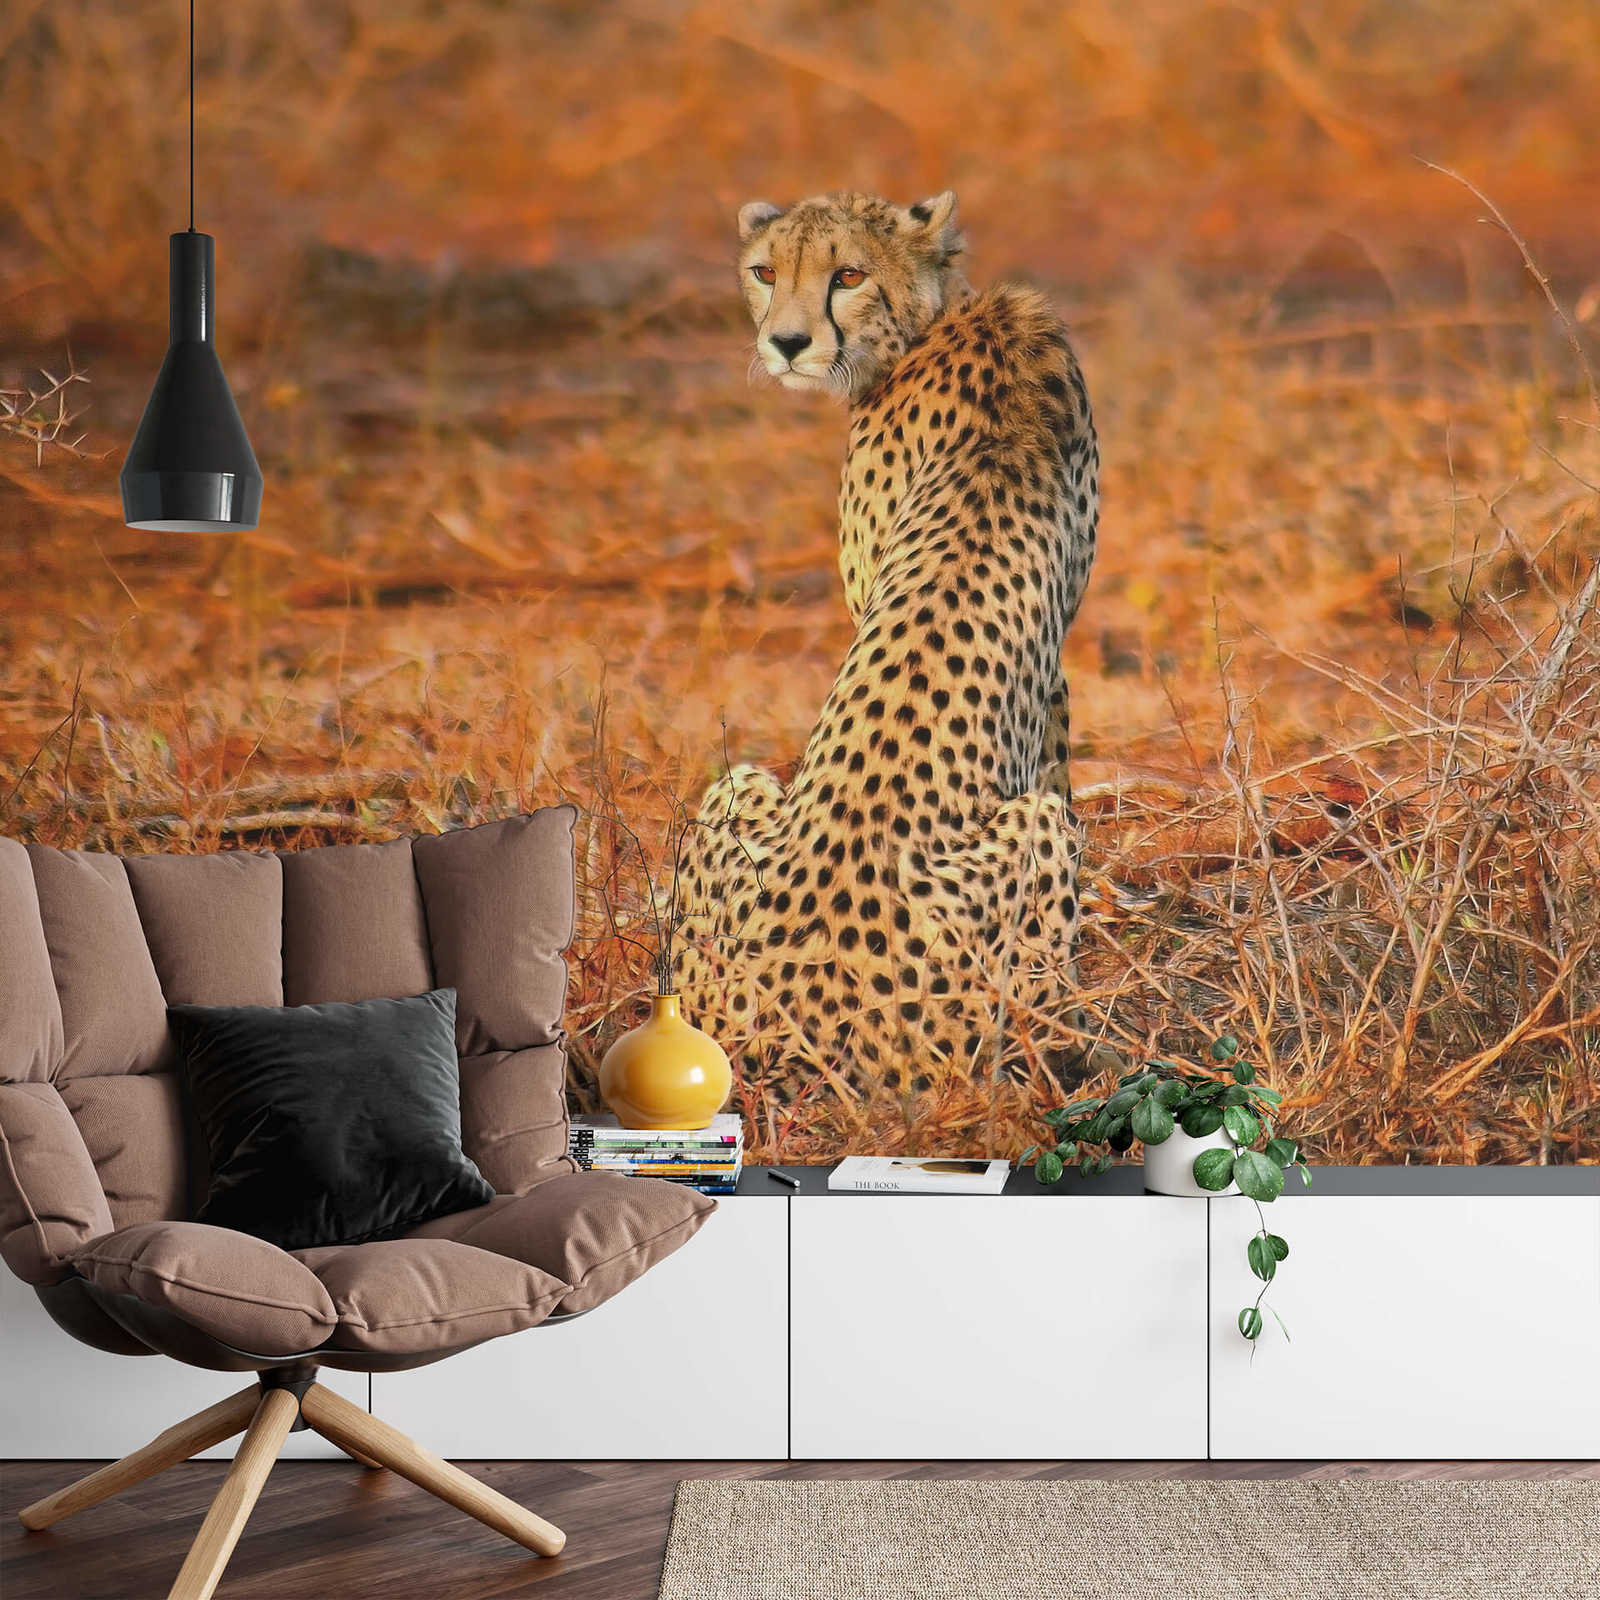             Photo wallpaper Leopard in nature - yellow, orange, black
        